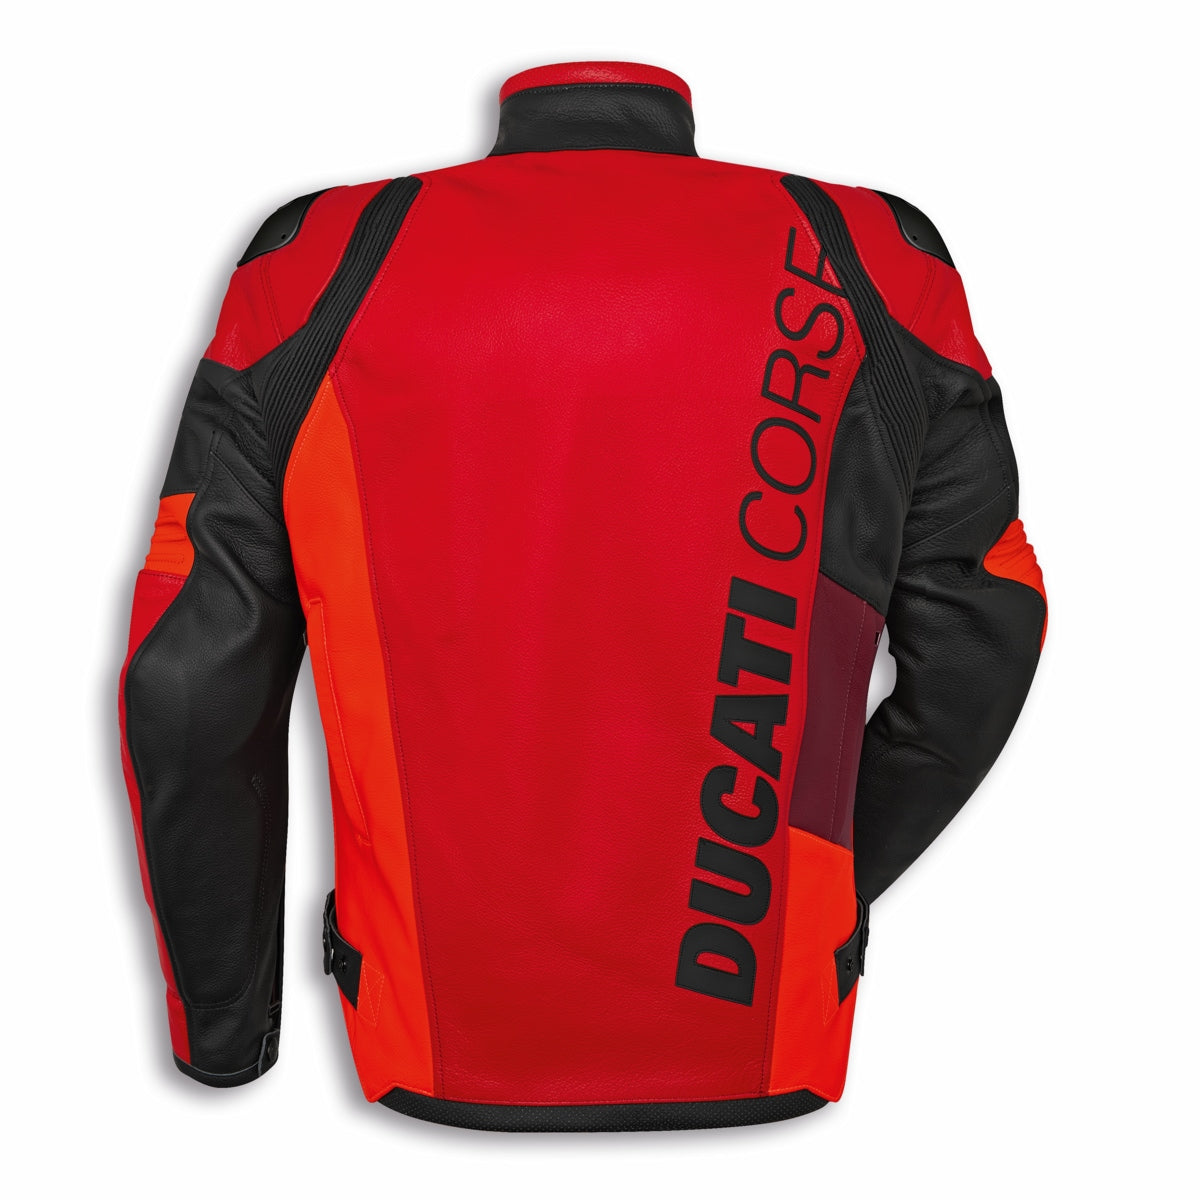 Ducati Corse C6 Men's Leather jacket